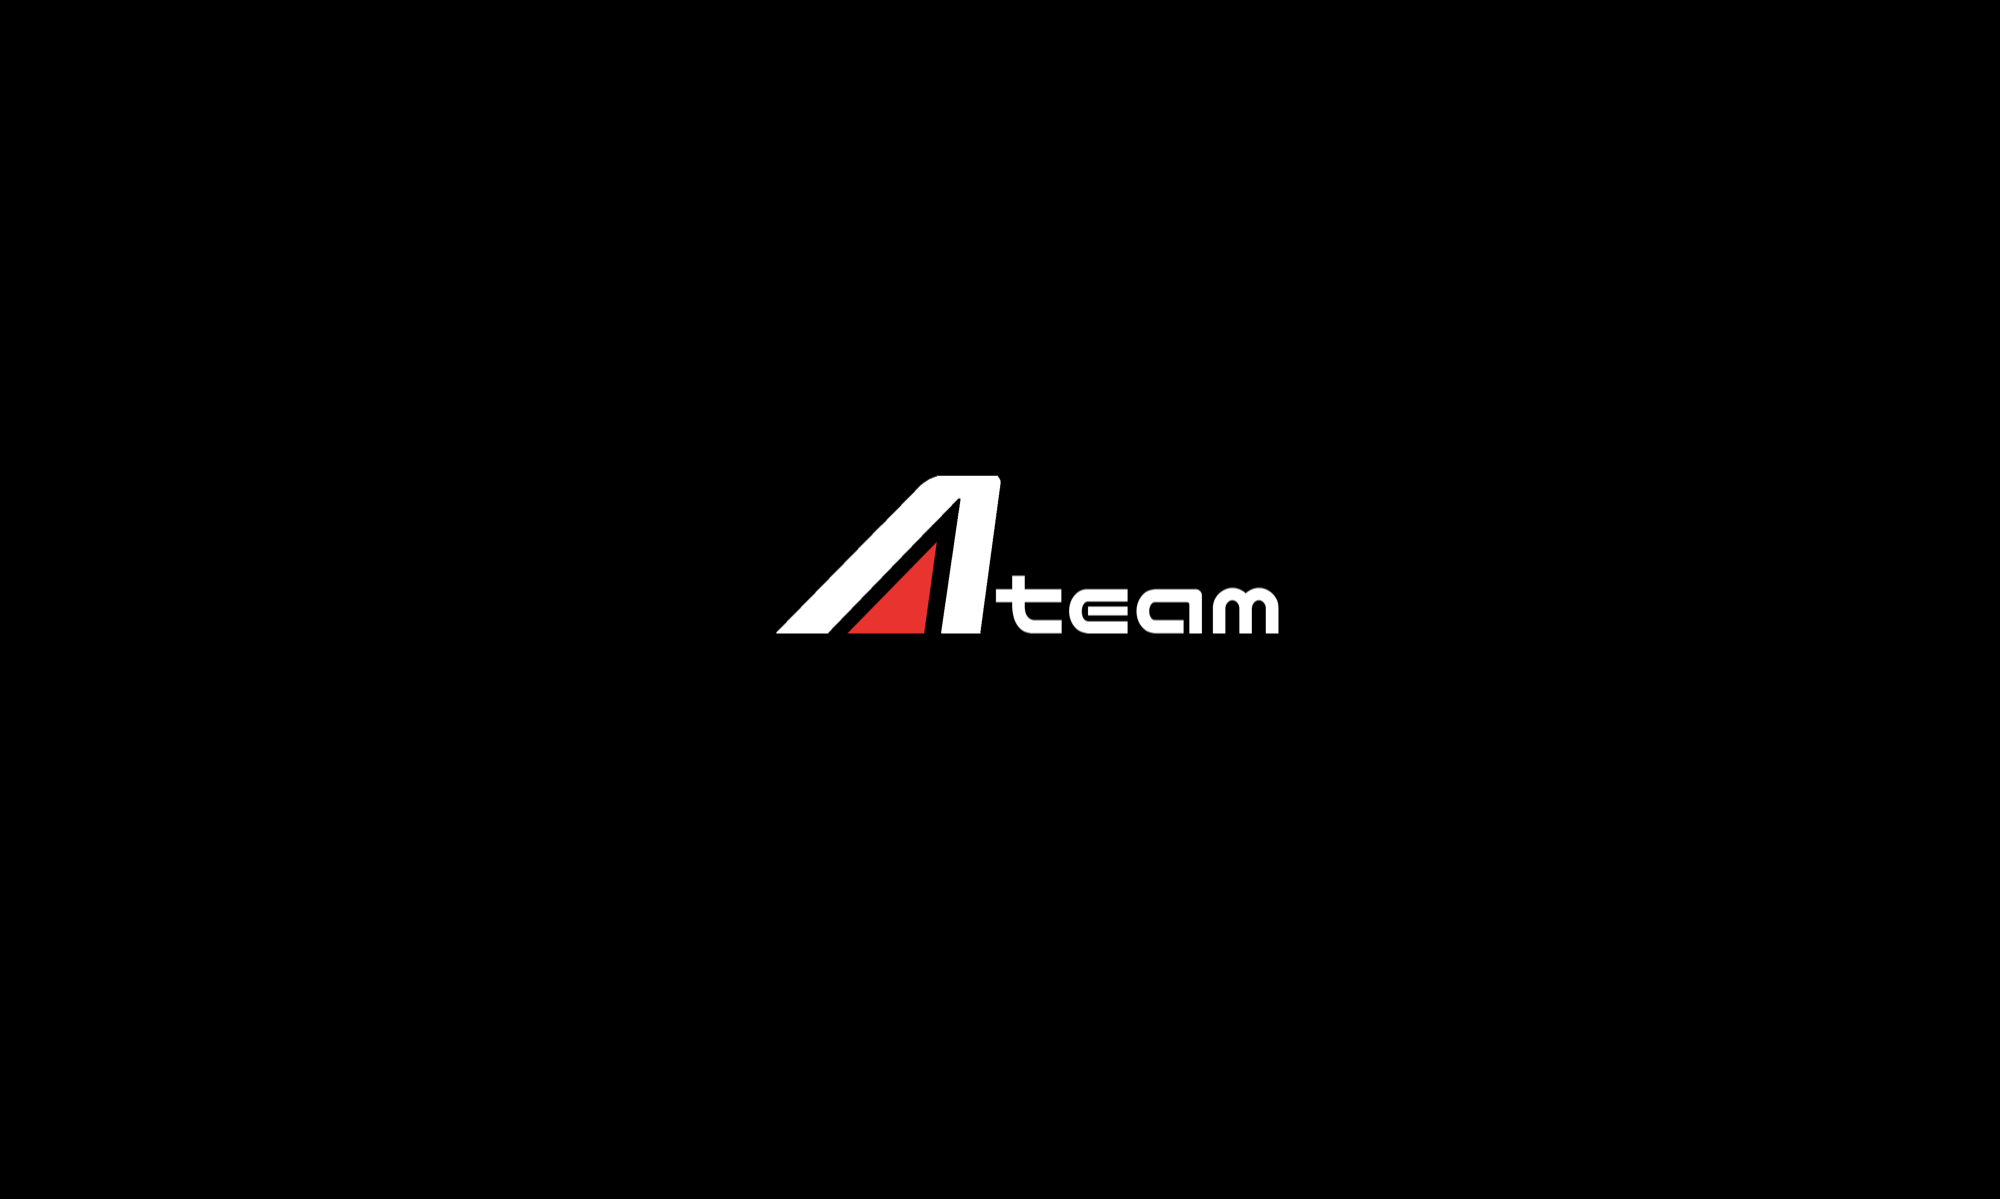 A-TEAM Corporation